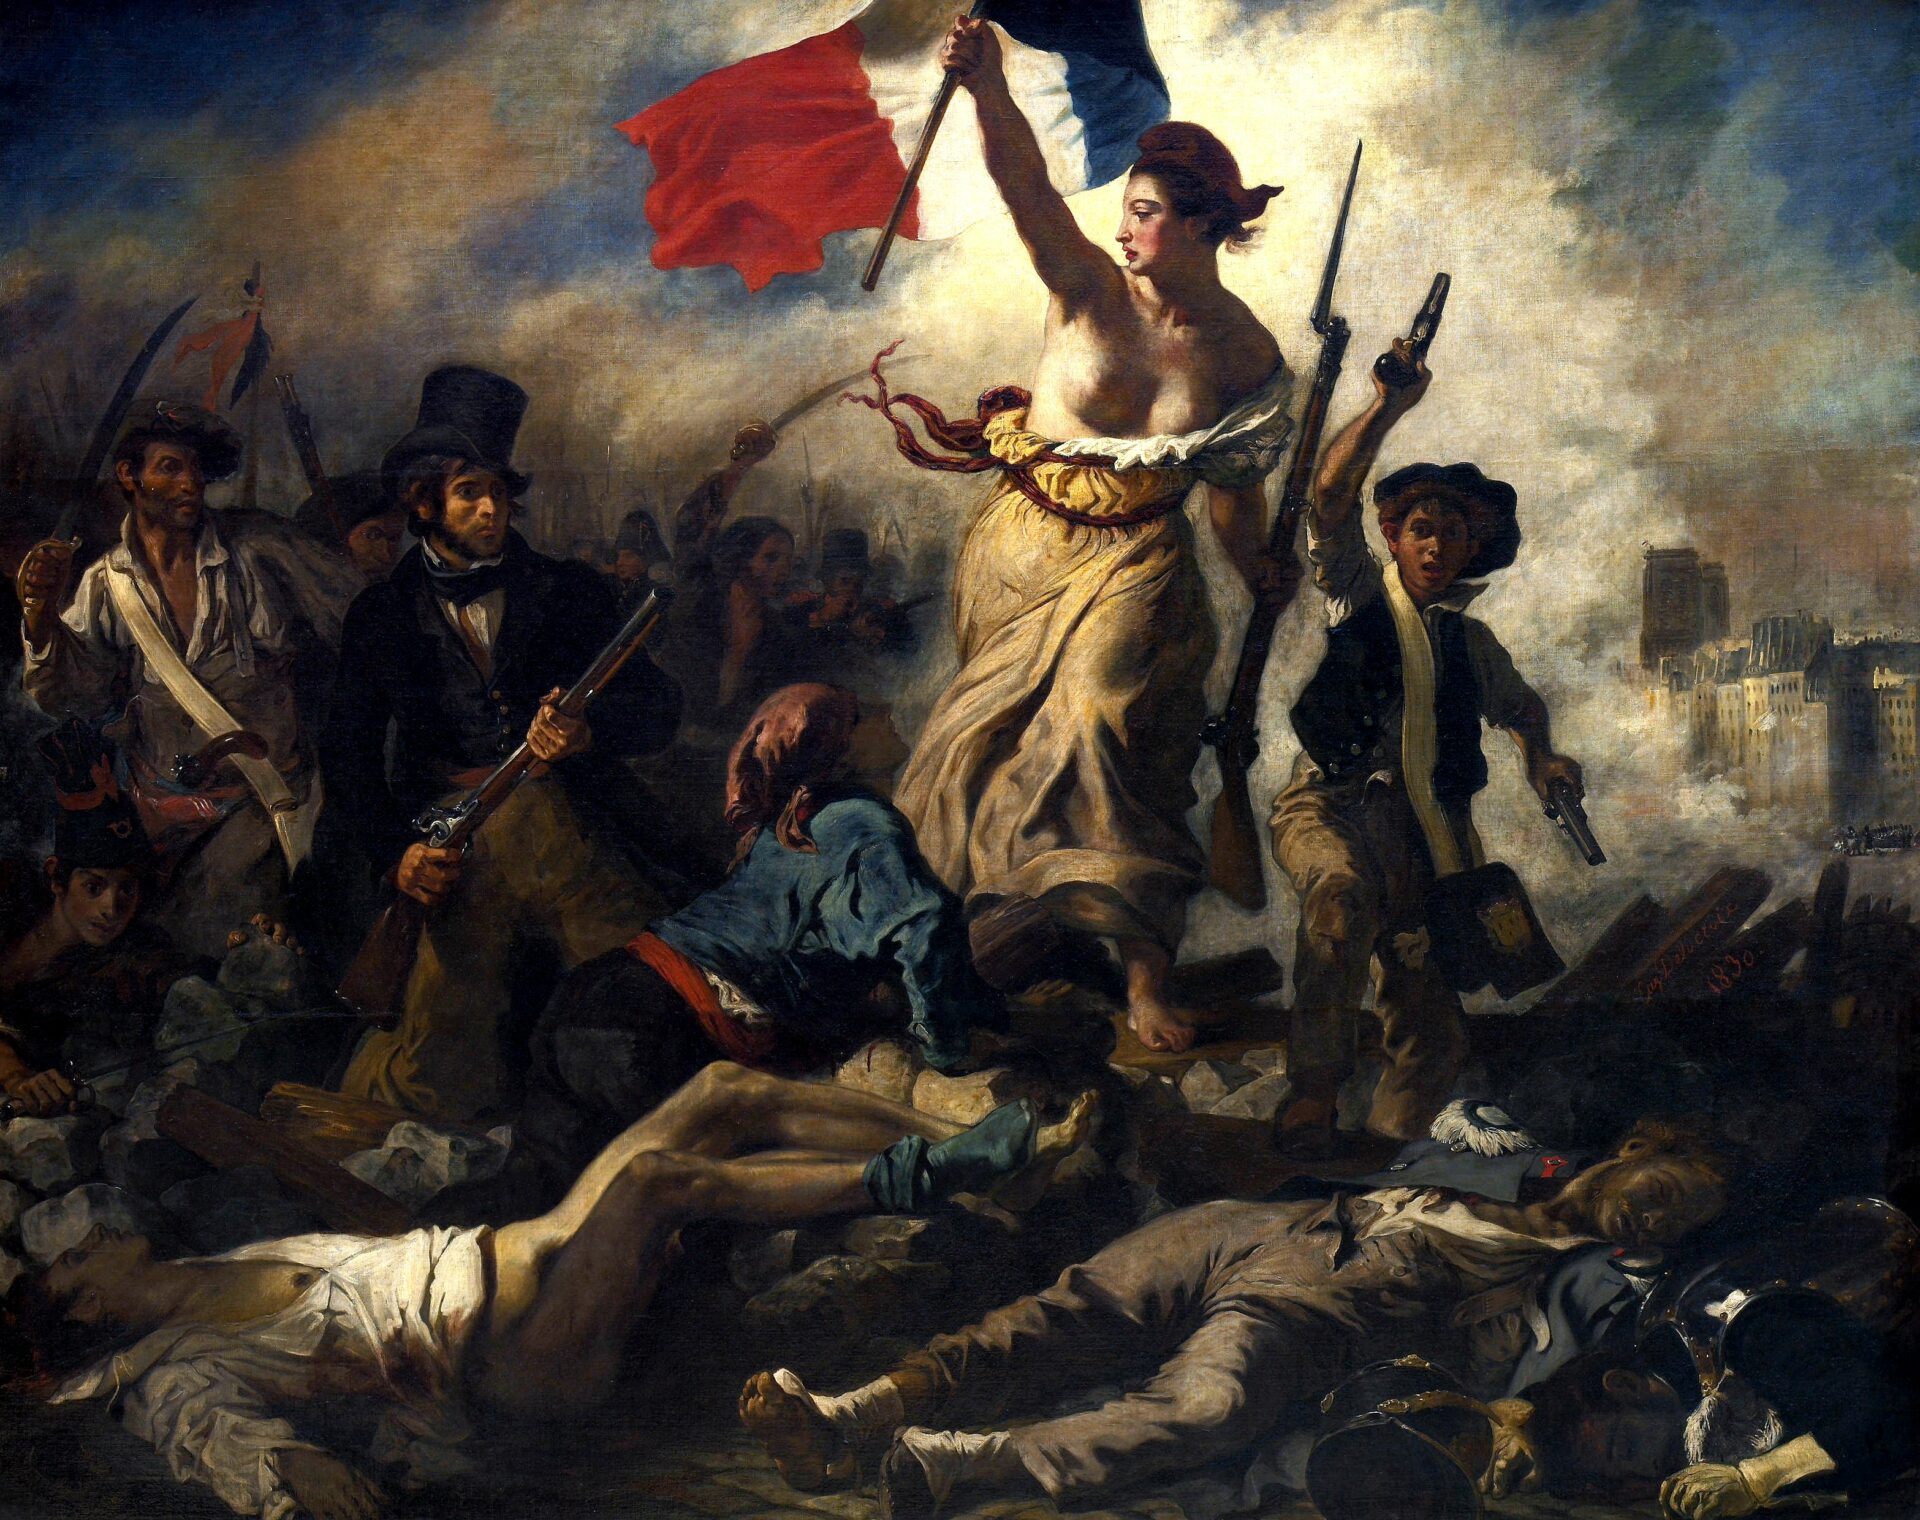 The Romantic Protest | Romanticism, Reaction, and Revolution